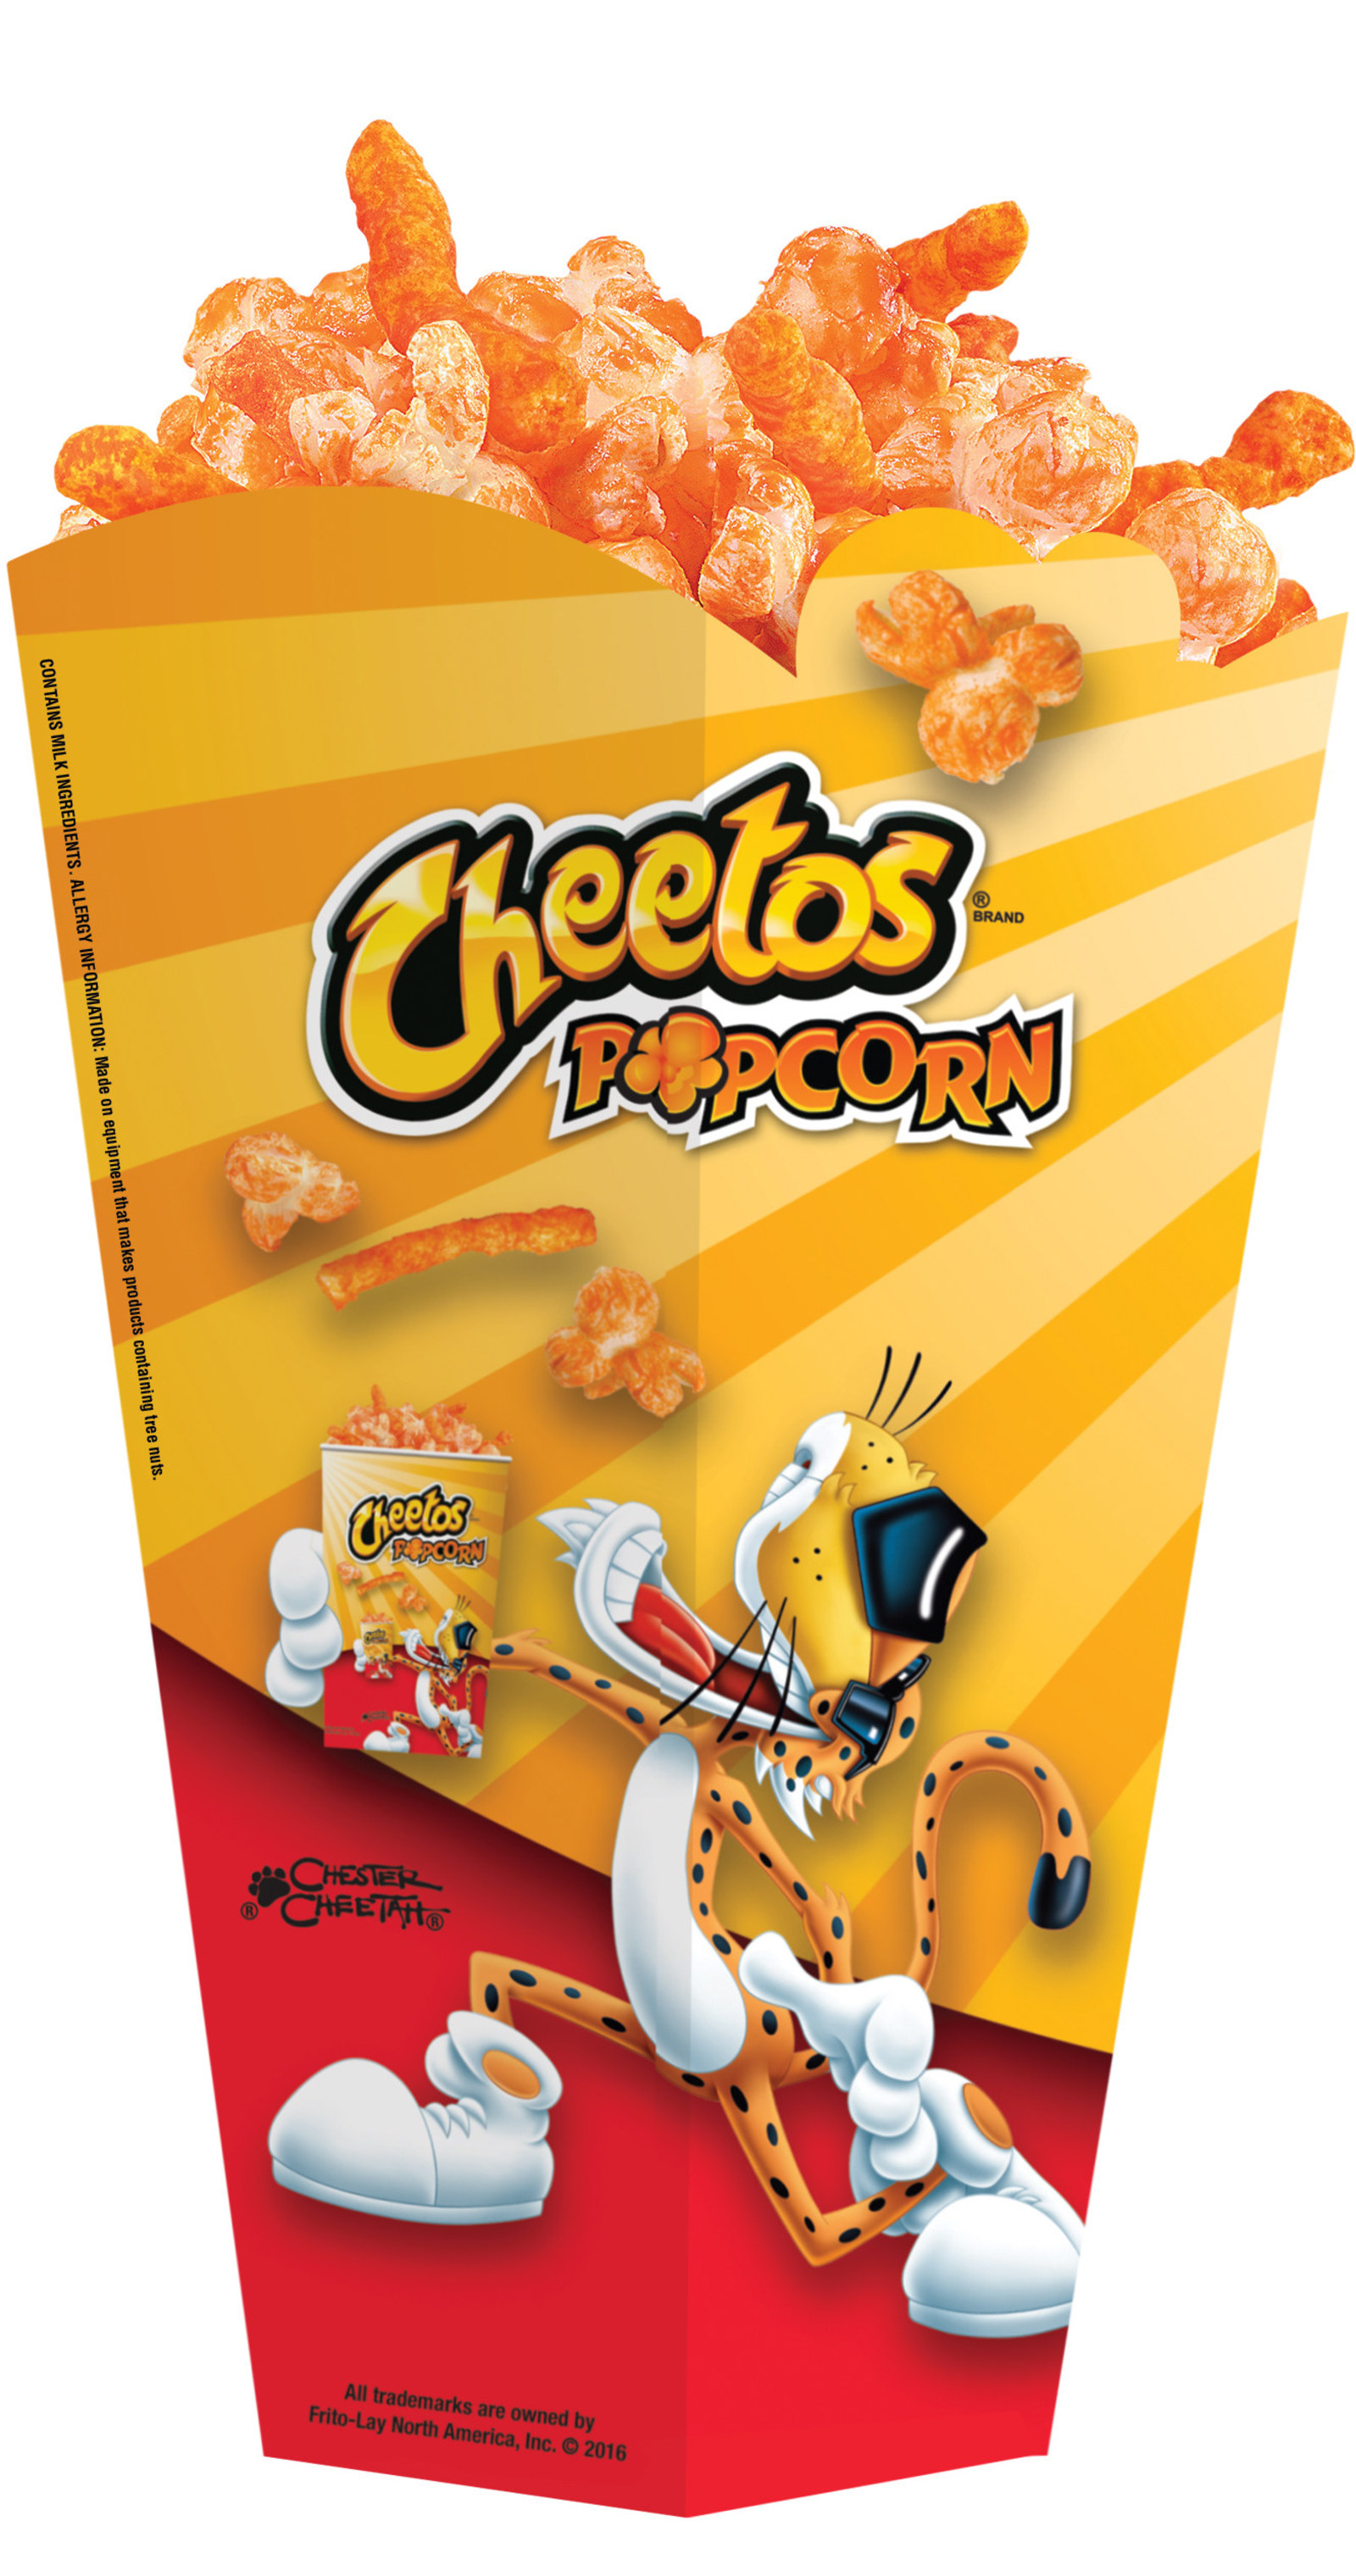 Cheetos Popcorn To Premiere At Regal Cinemas Nationwide |